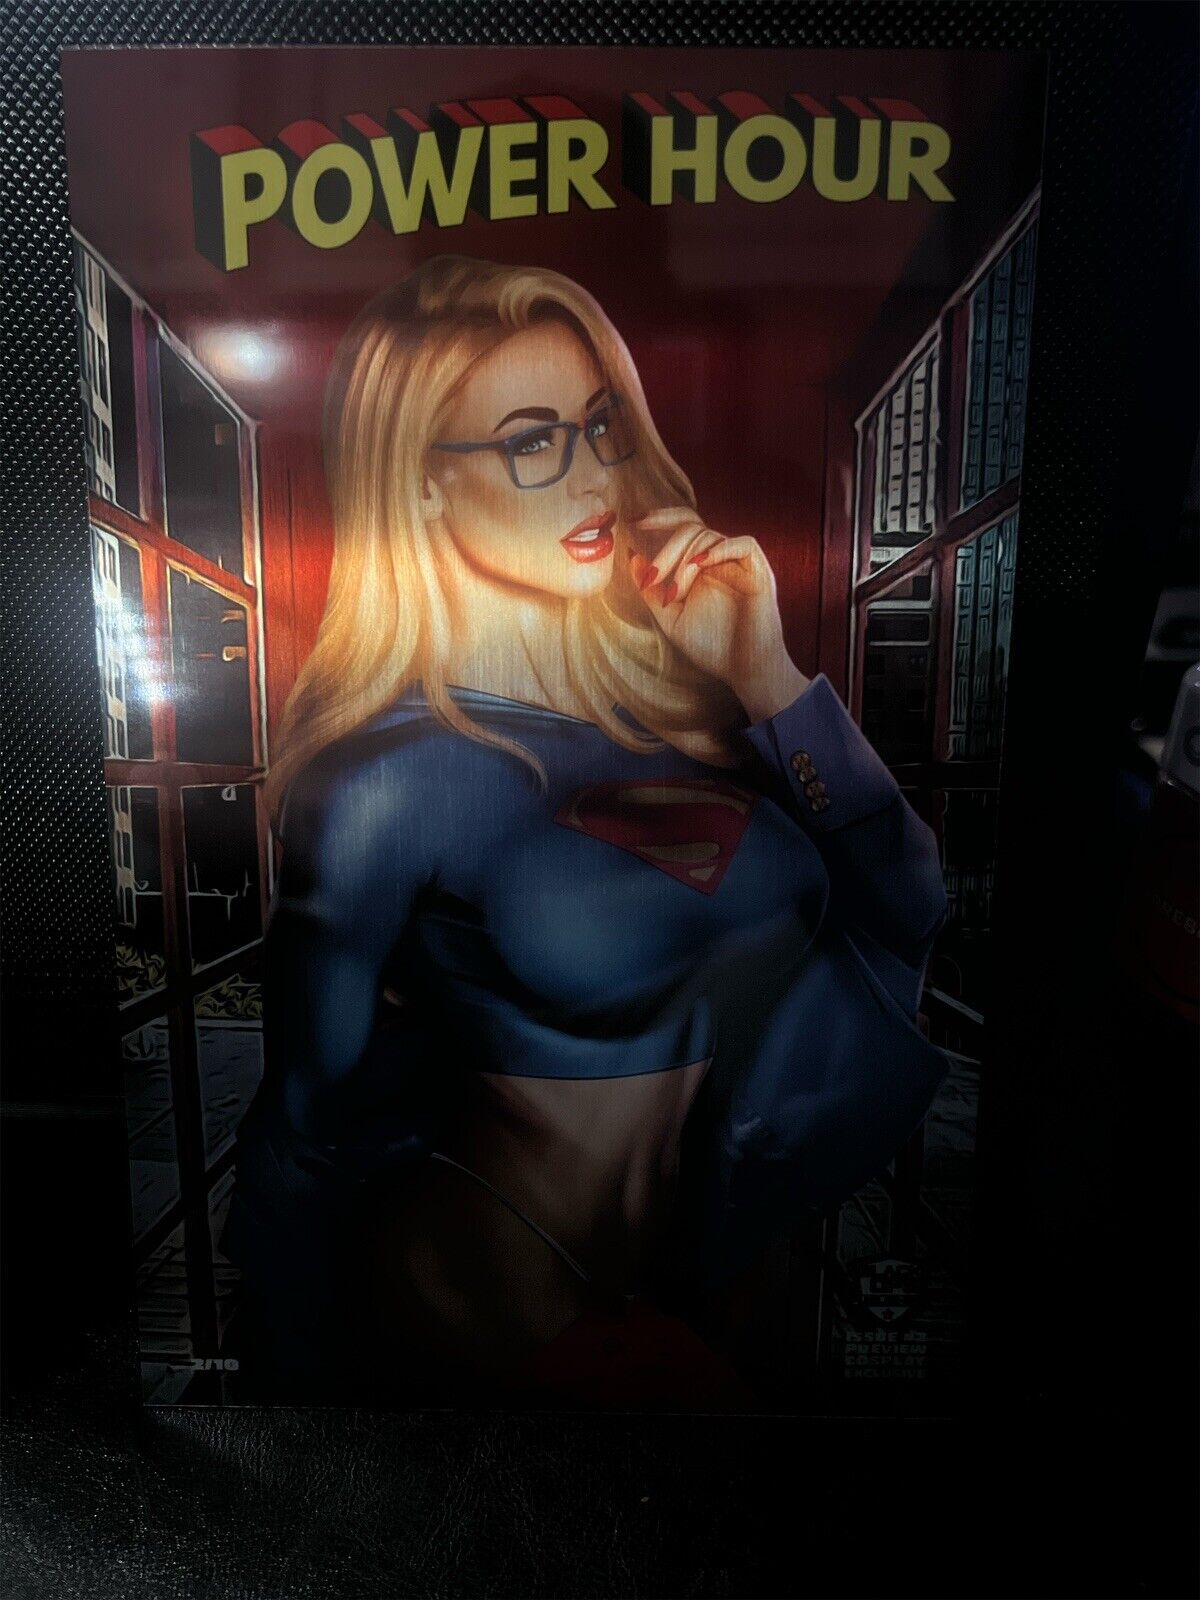 POWER HOUR 2 SUPER GIRL FERNANDO ROCHA METAL CVR LIMITED EDTN #2/10